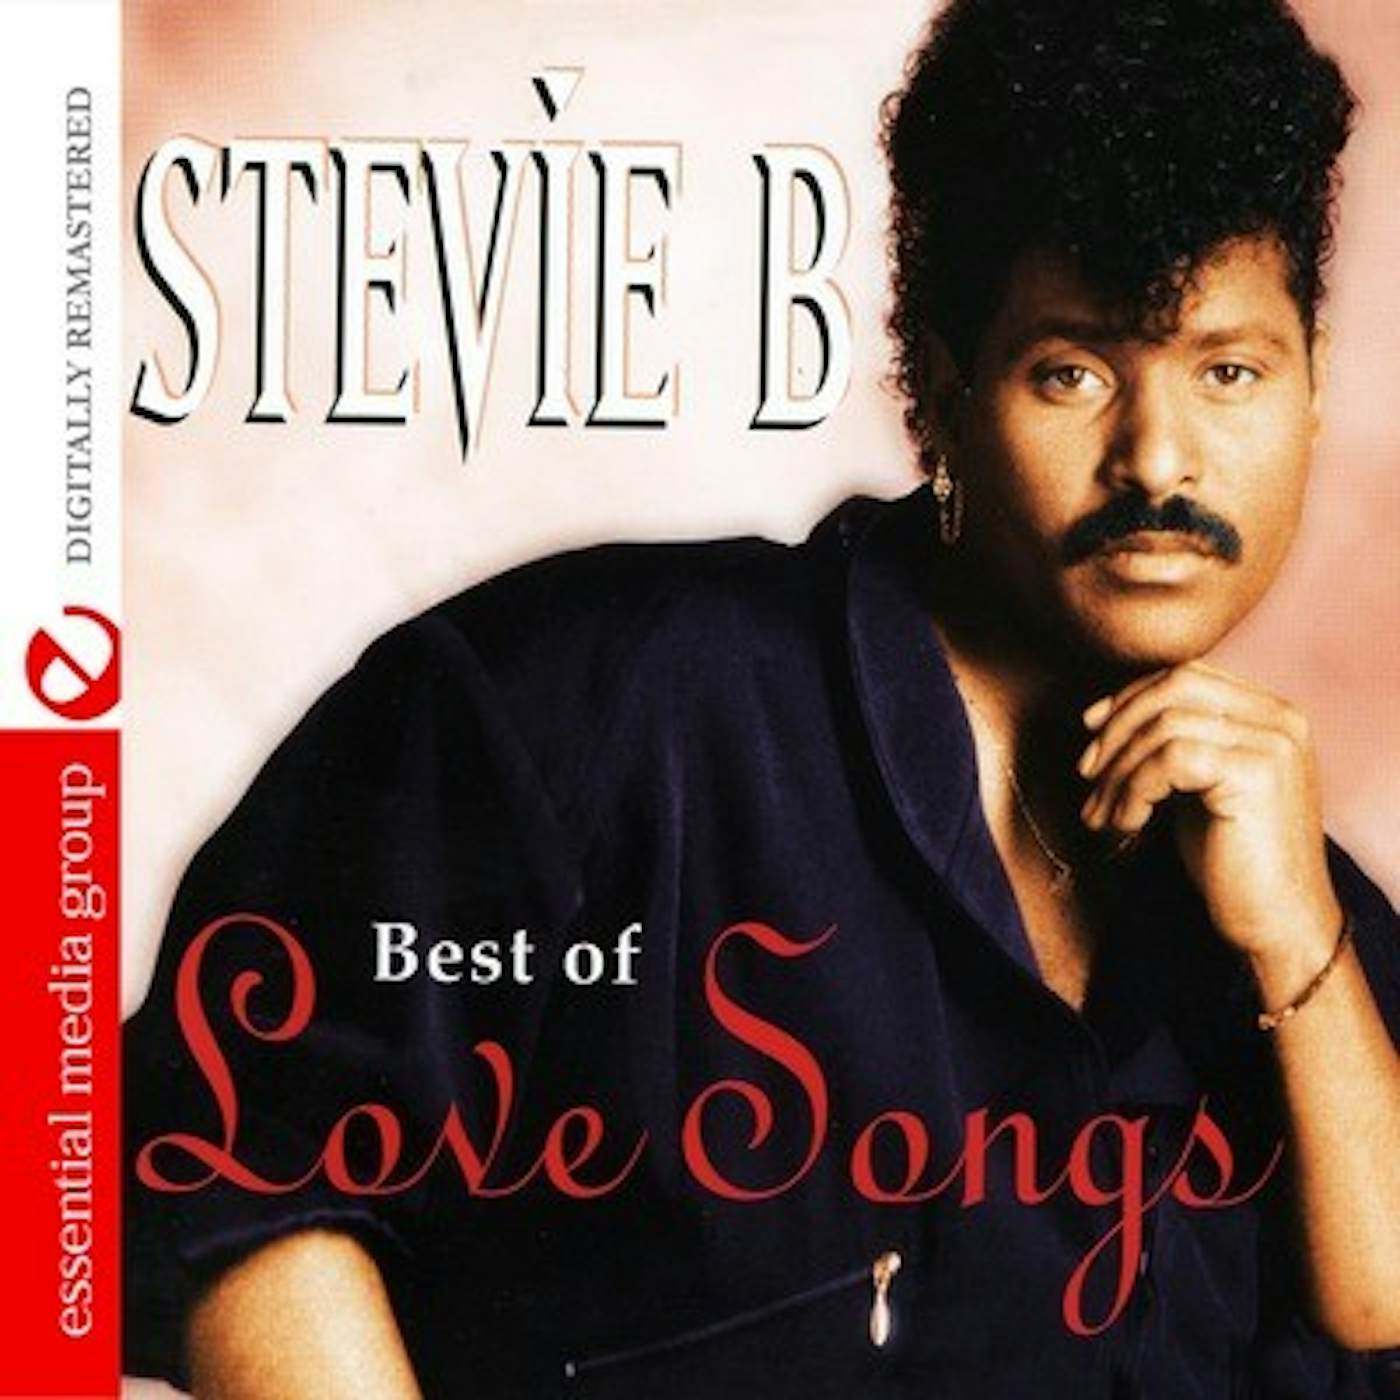 Stevie B BEST OF LOVE SONGS CD